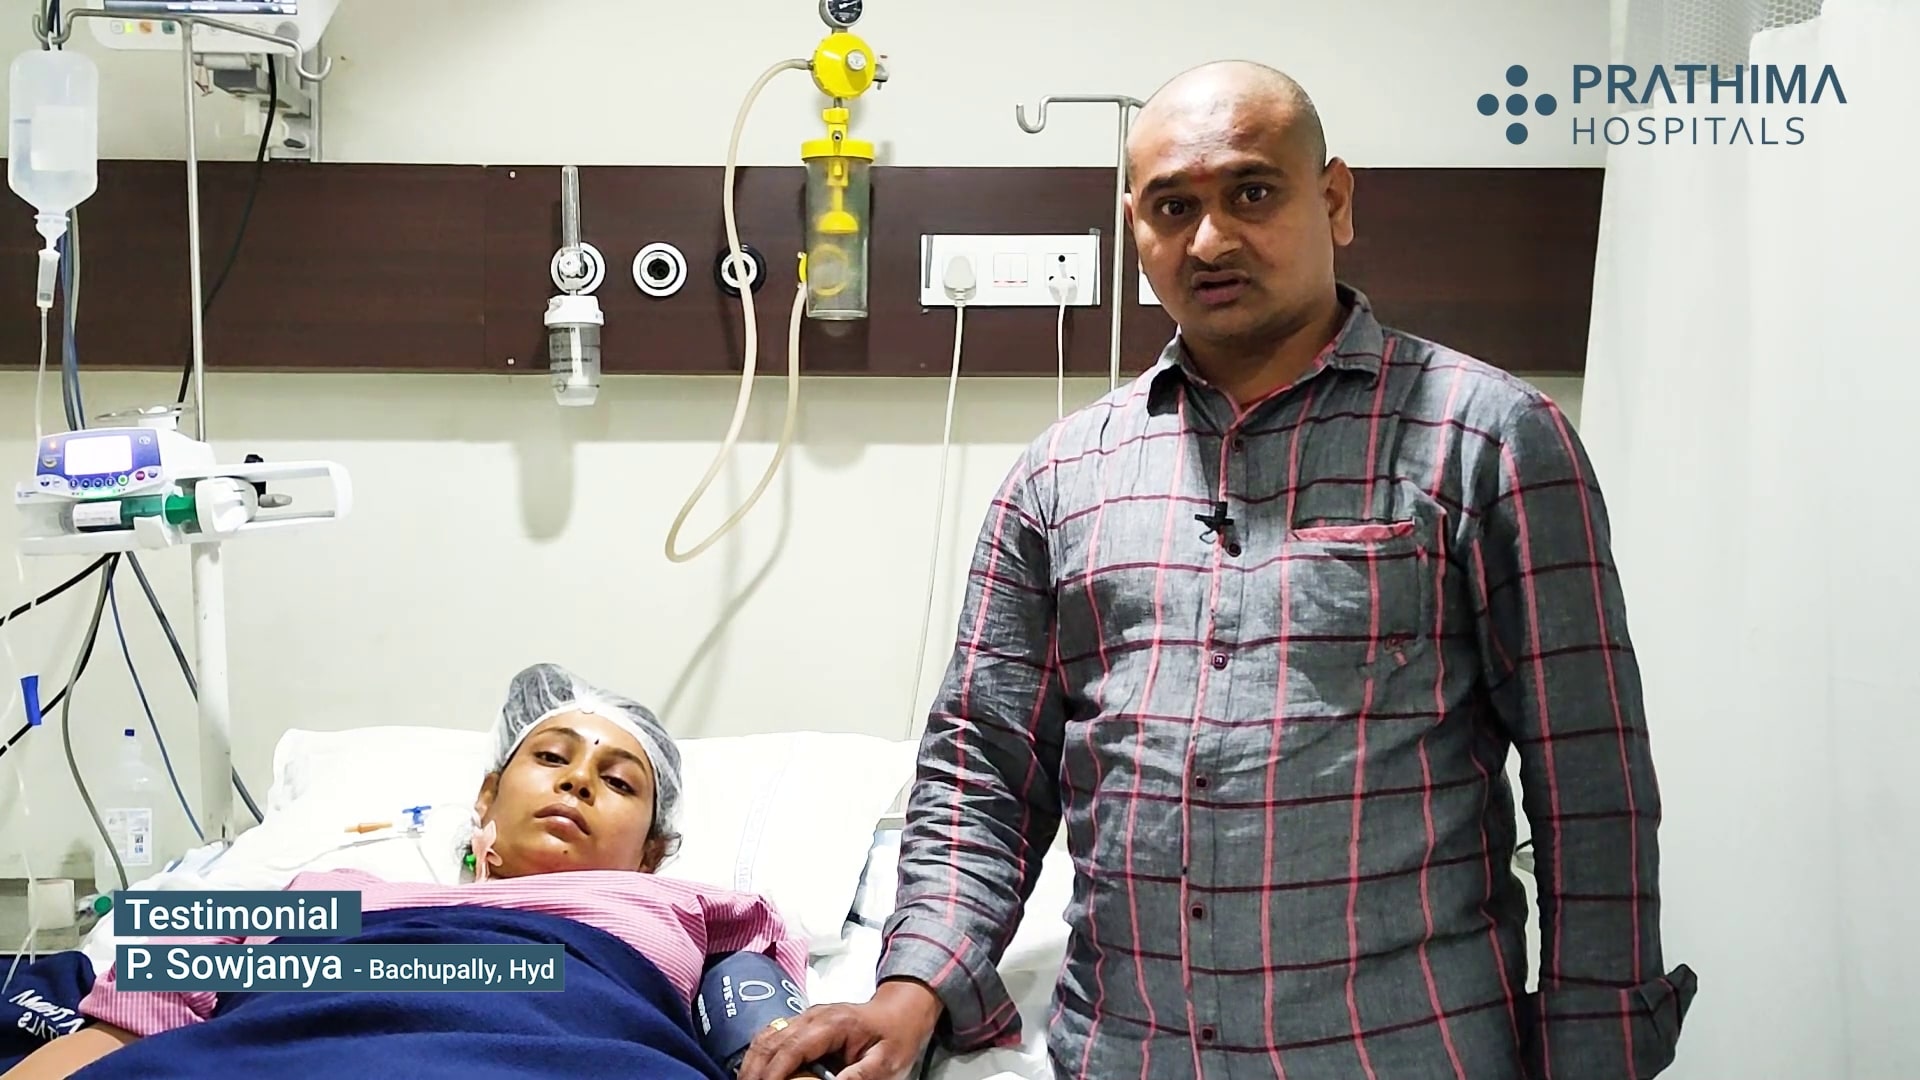 ectopic pregnancy treatment by Dr. Madhavi, prathima hospitals